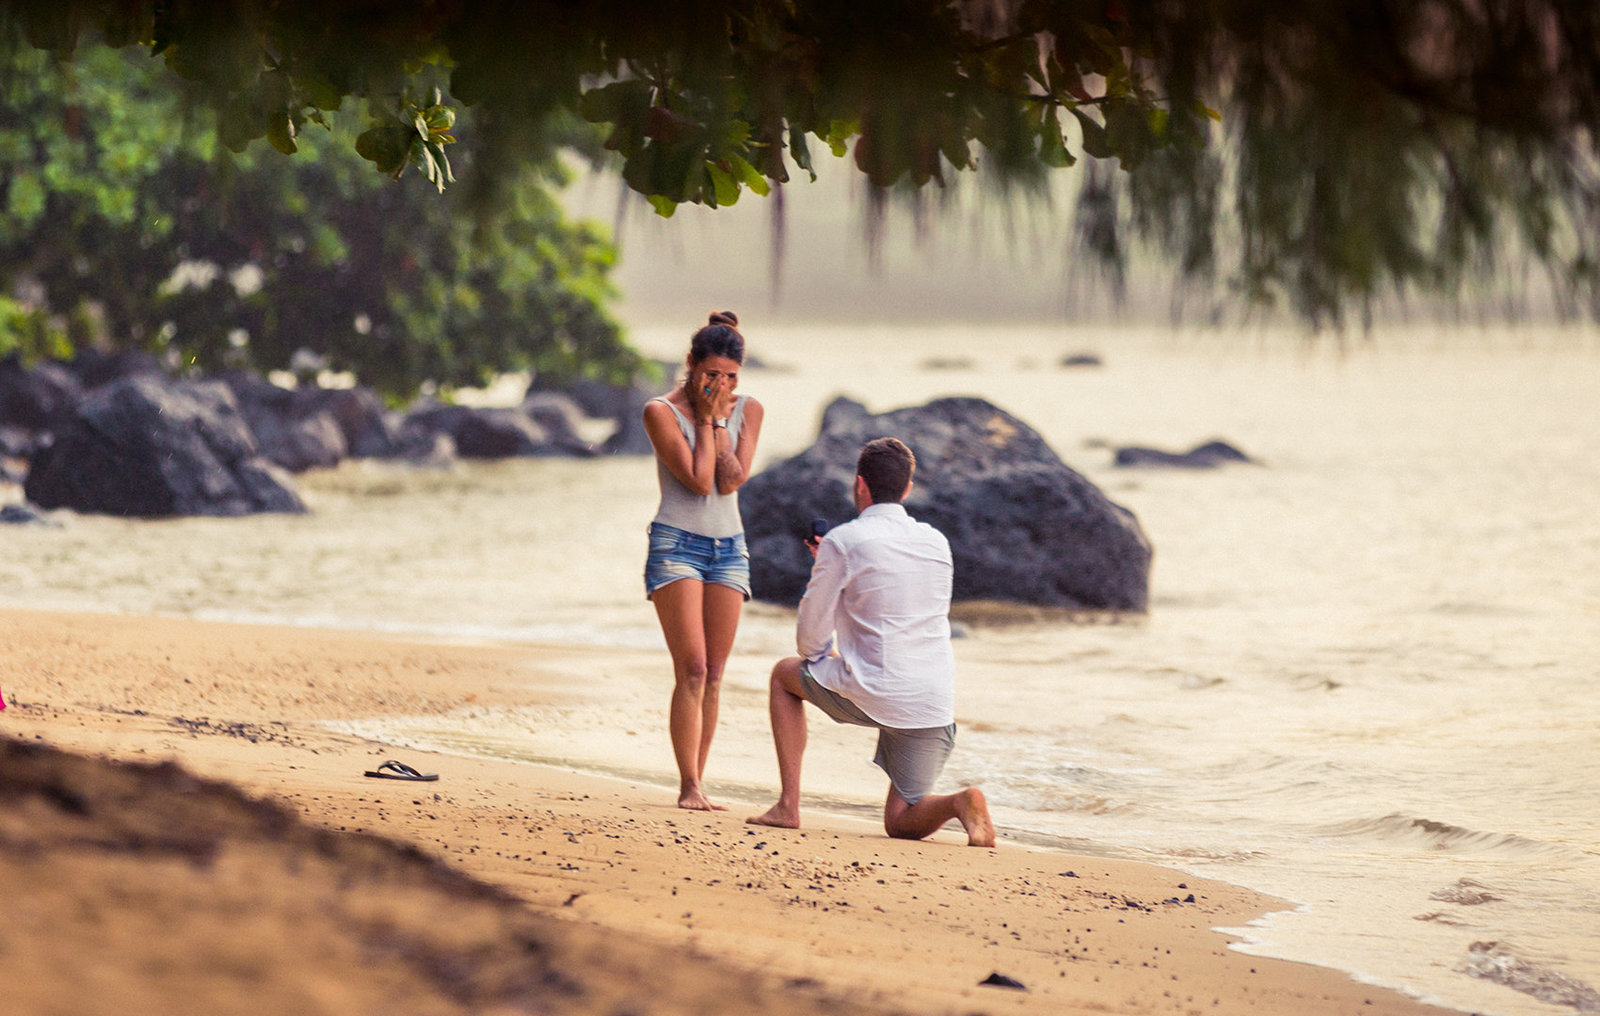 oahu photographers for couples